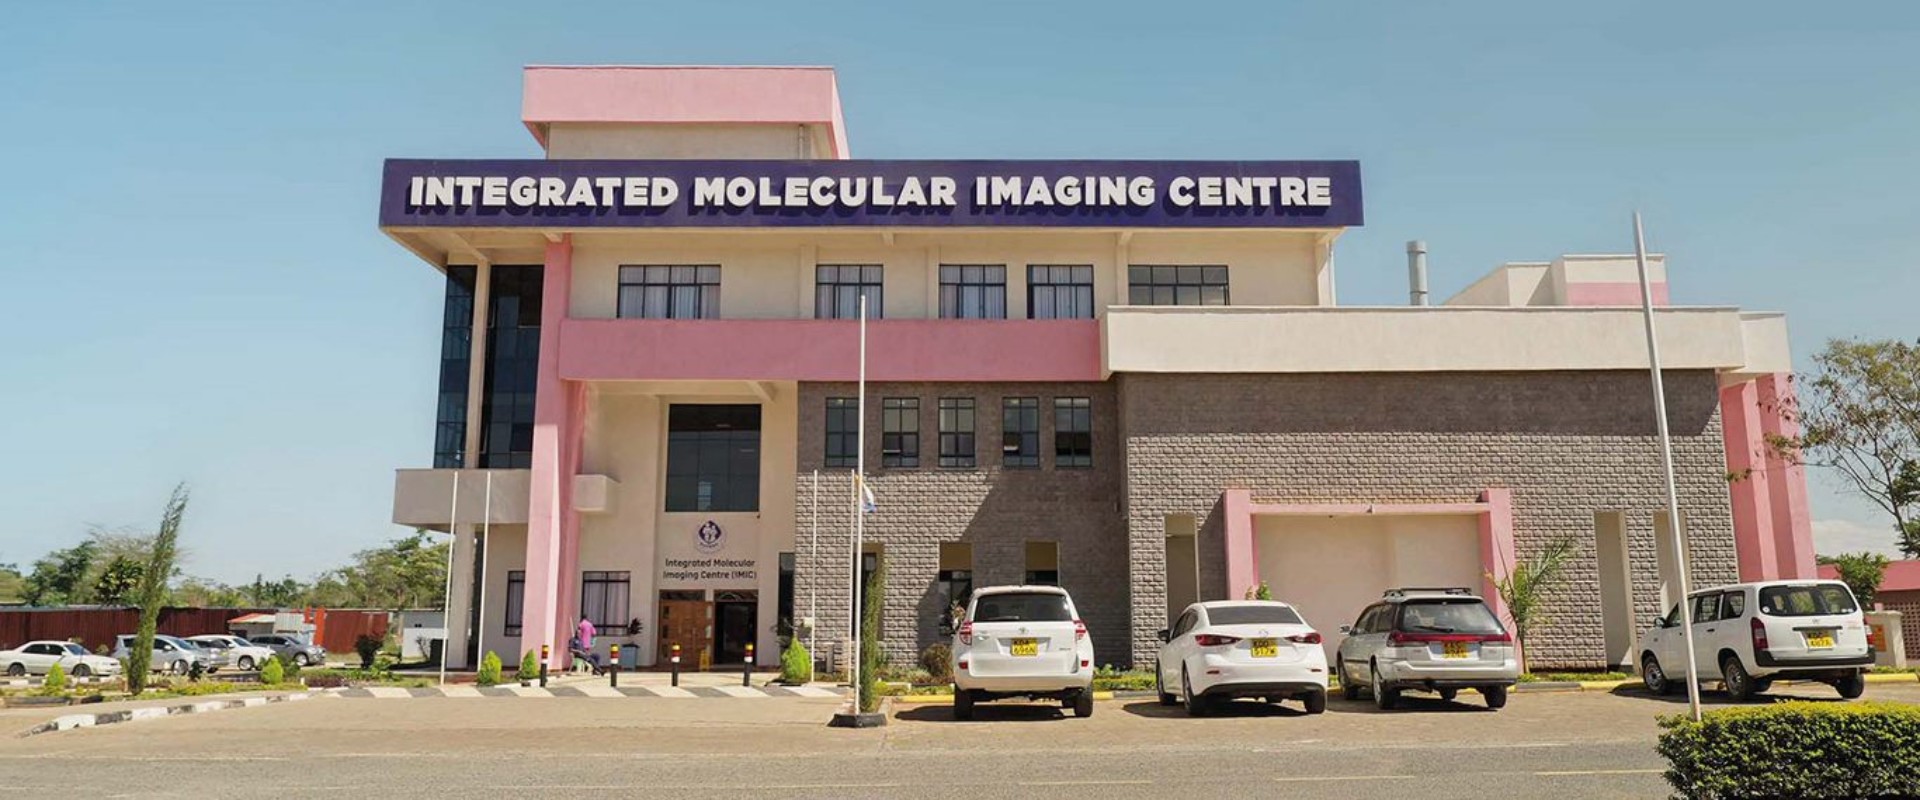 The Integrated Molecular Imaging Centre in Kenya.